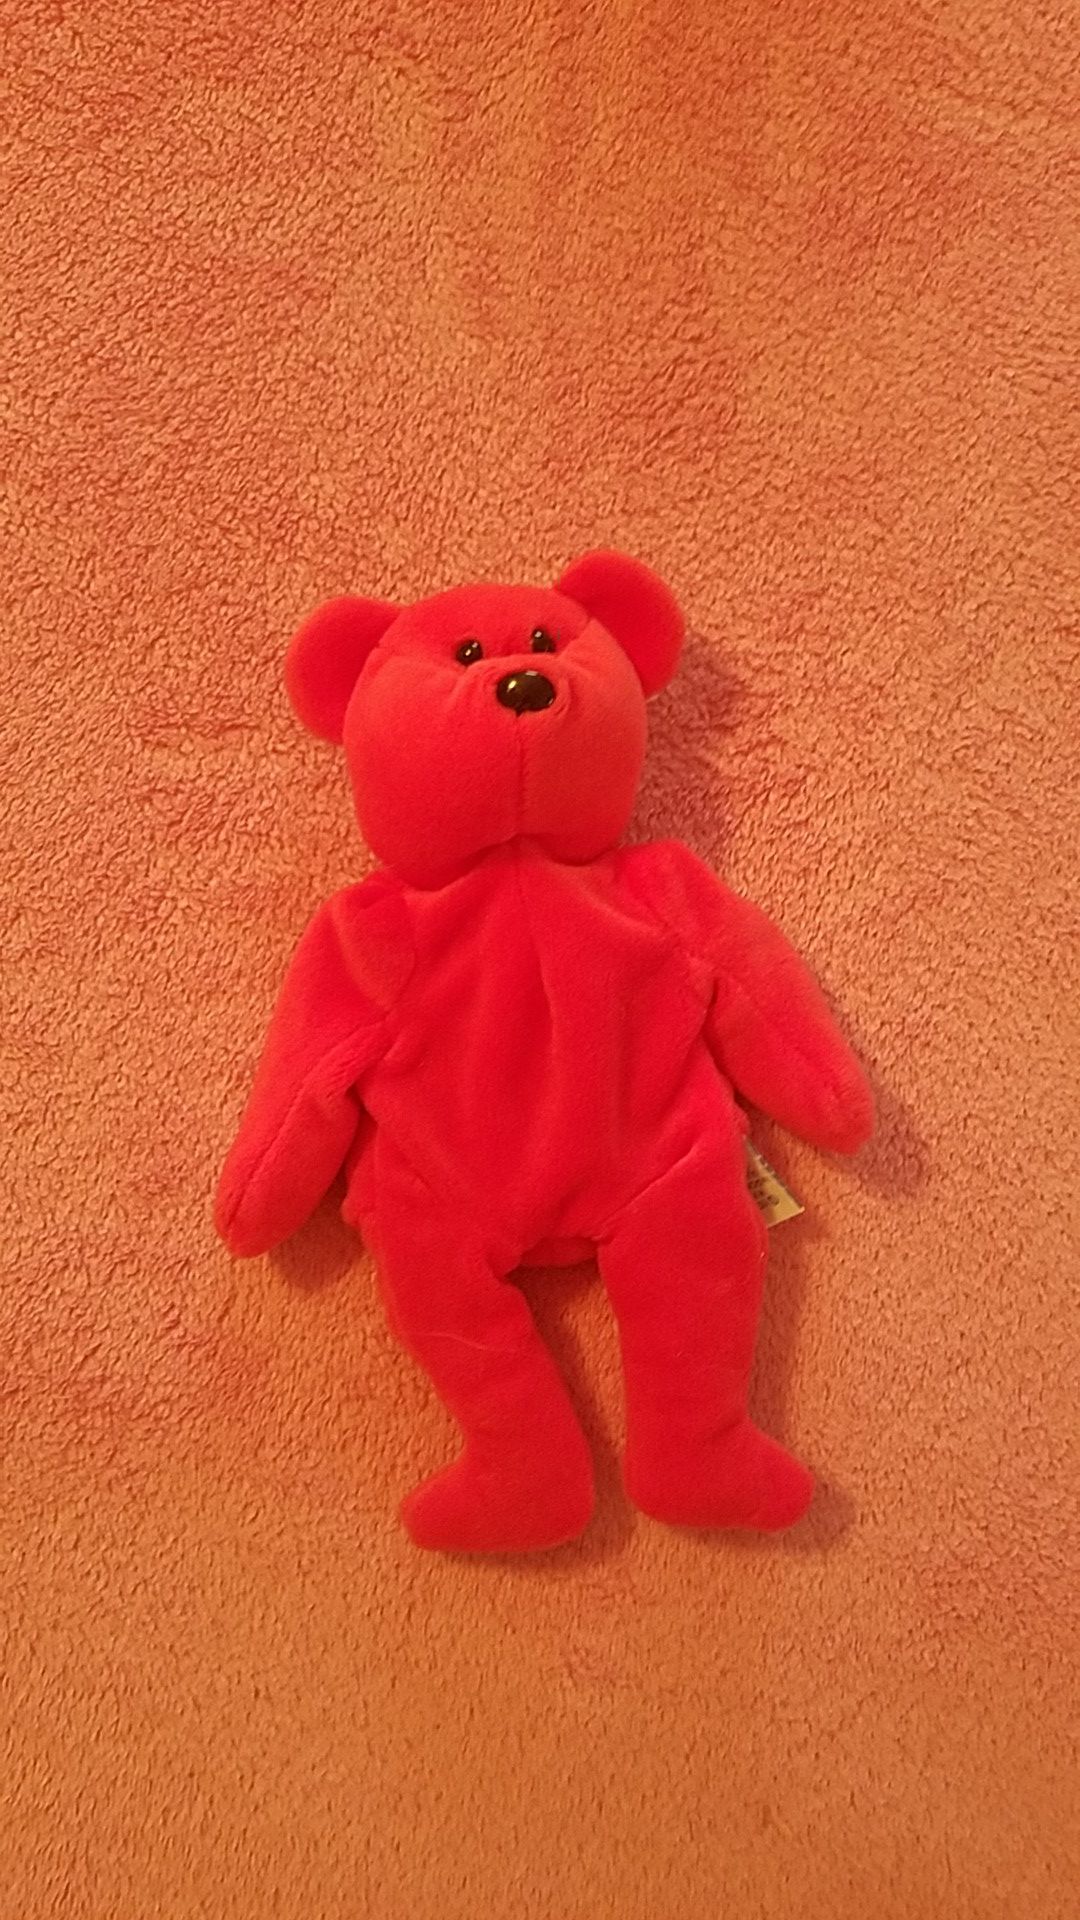 Brand new Valentine's day red bear